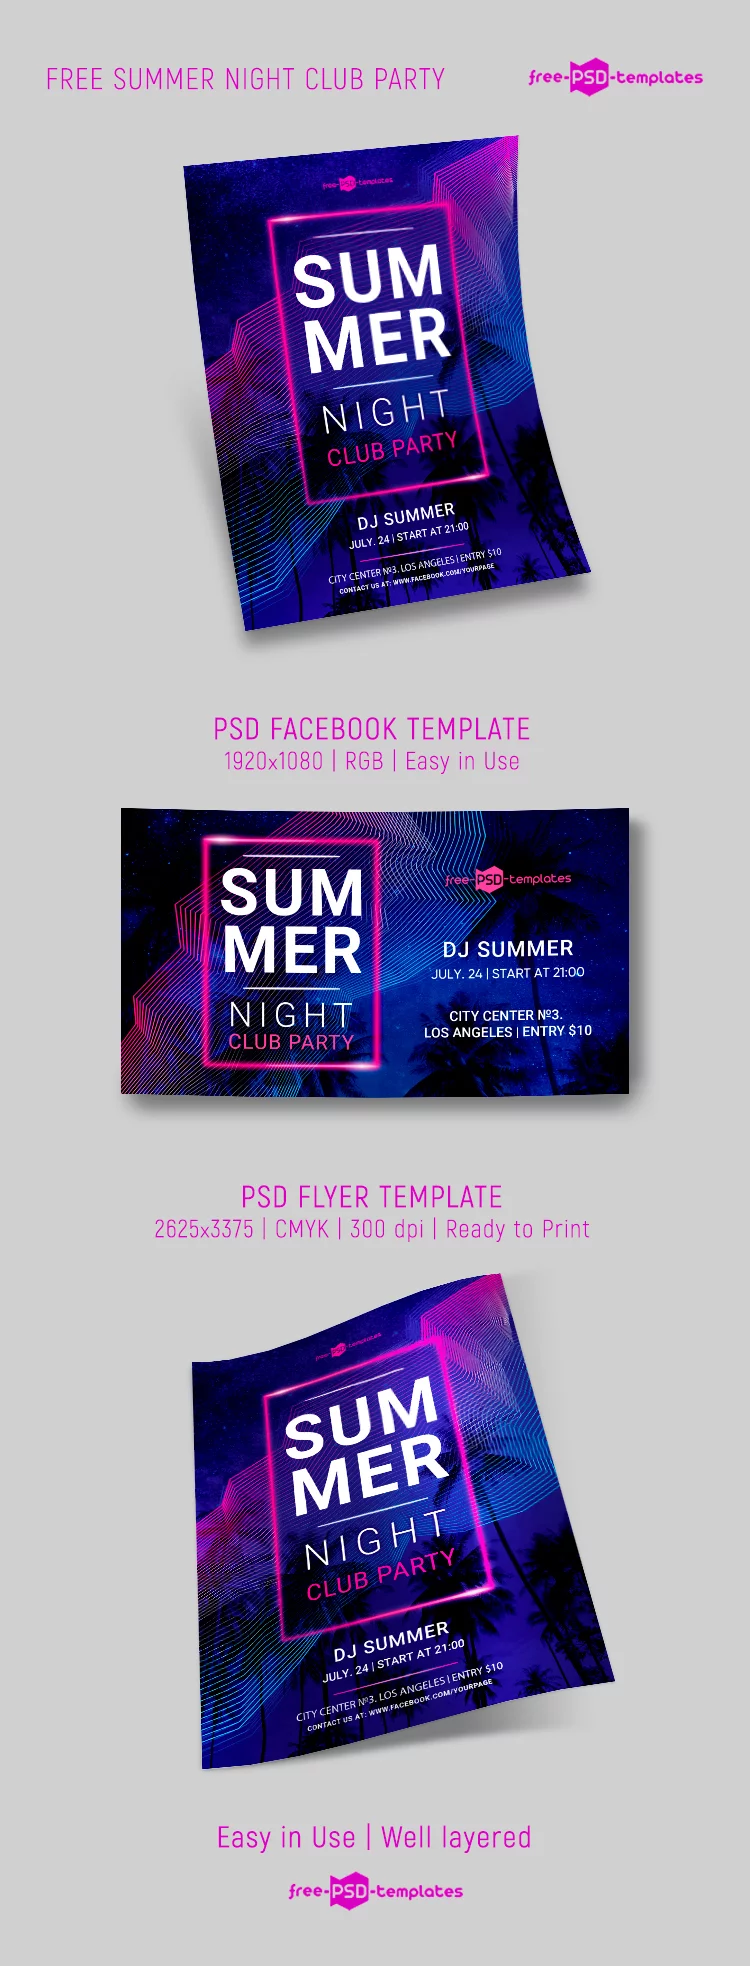 Free Summer Night Club Party Flyer